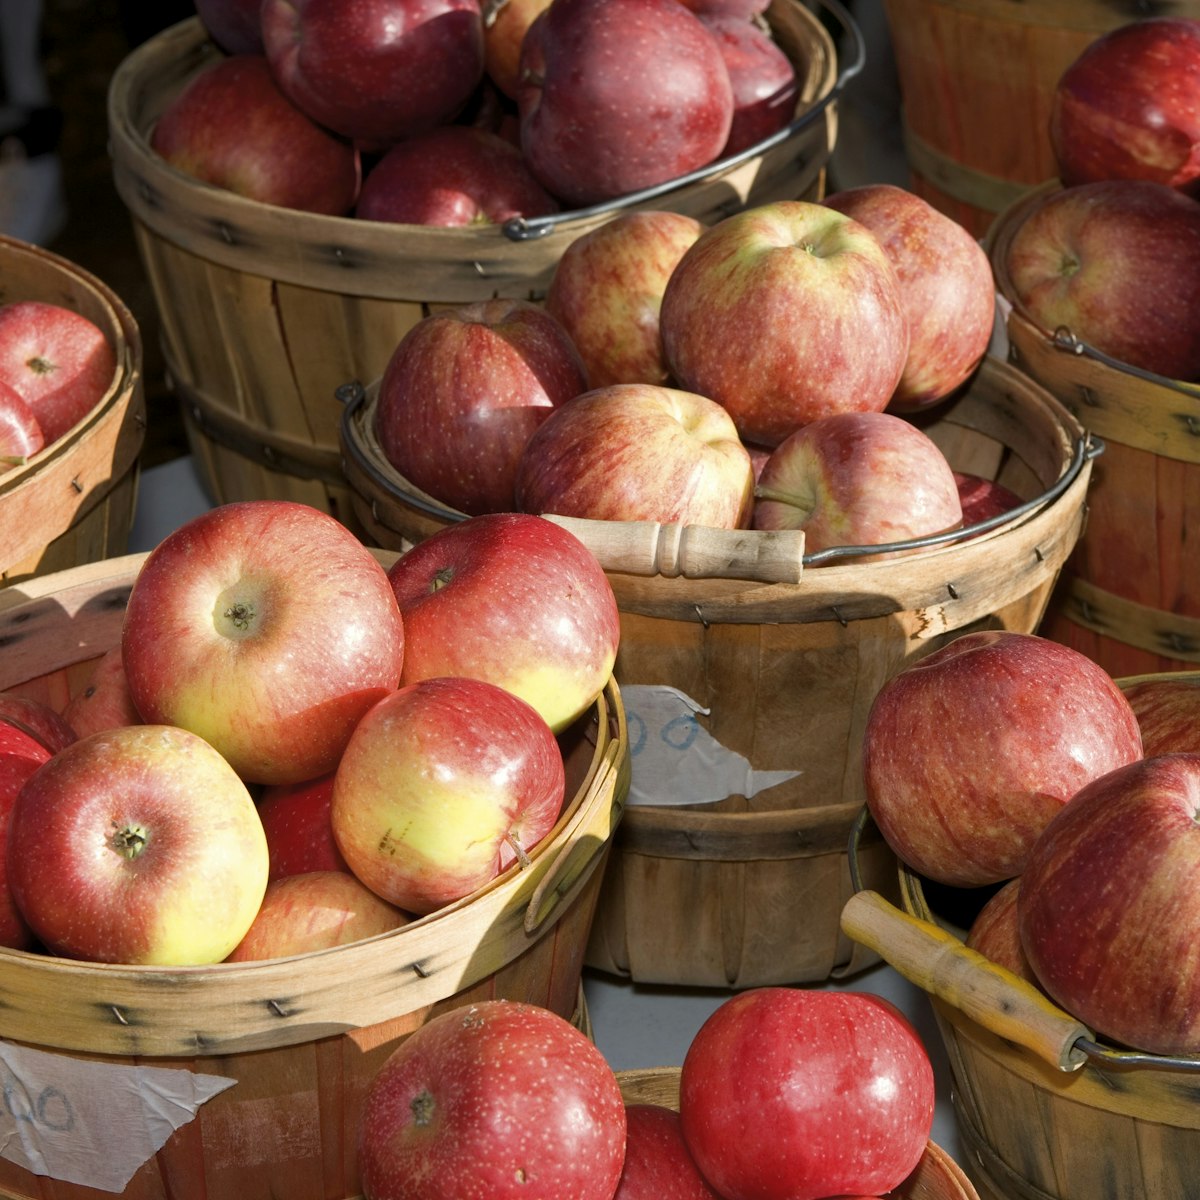 USA, New Mexico, Santa Fe, Farmer's Market, baskets of apples for sale at farmers' market